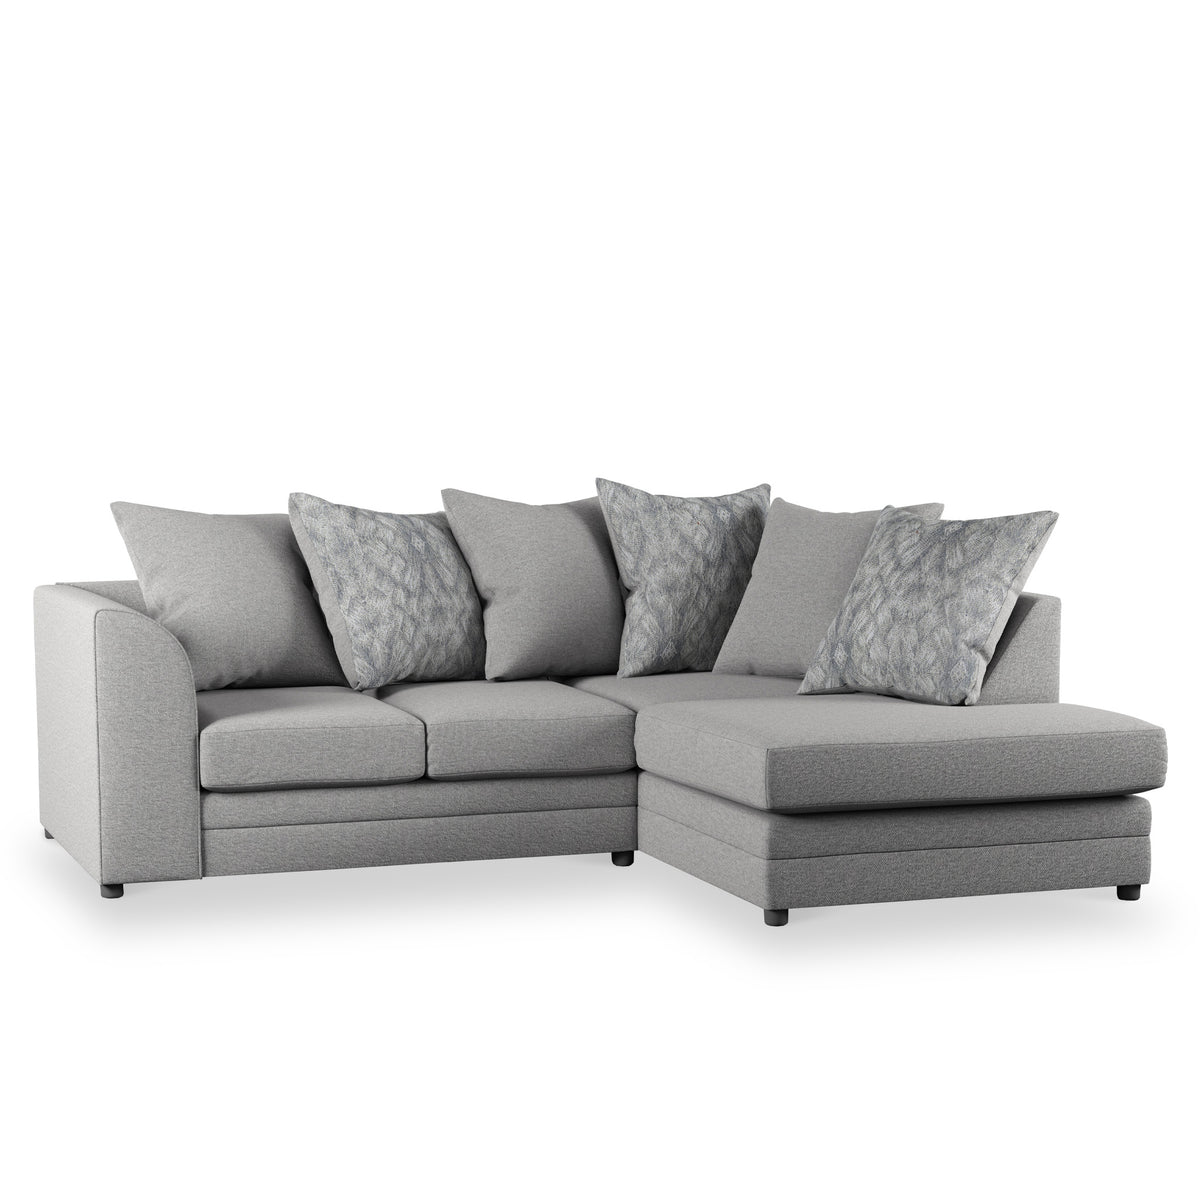 Tisha Grey Right Hand Corner Sofa from Roseland Furniture